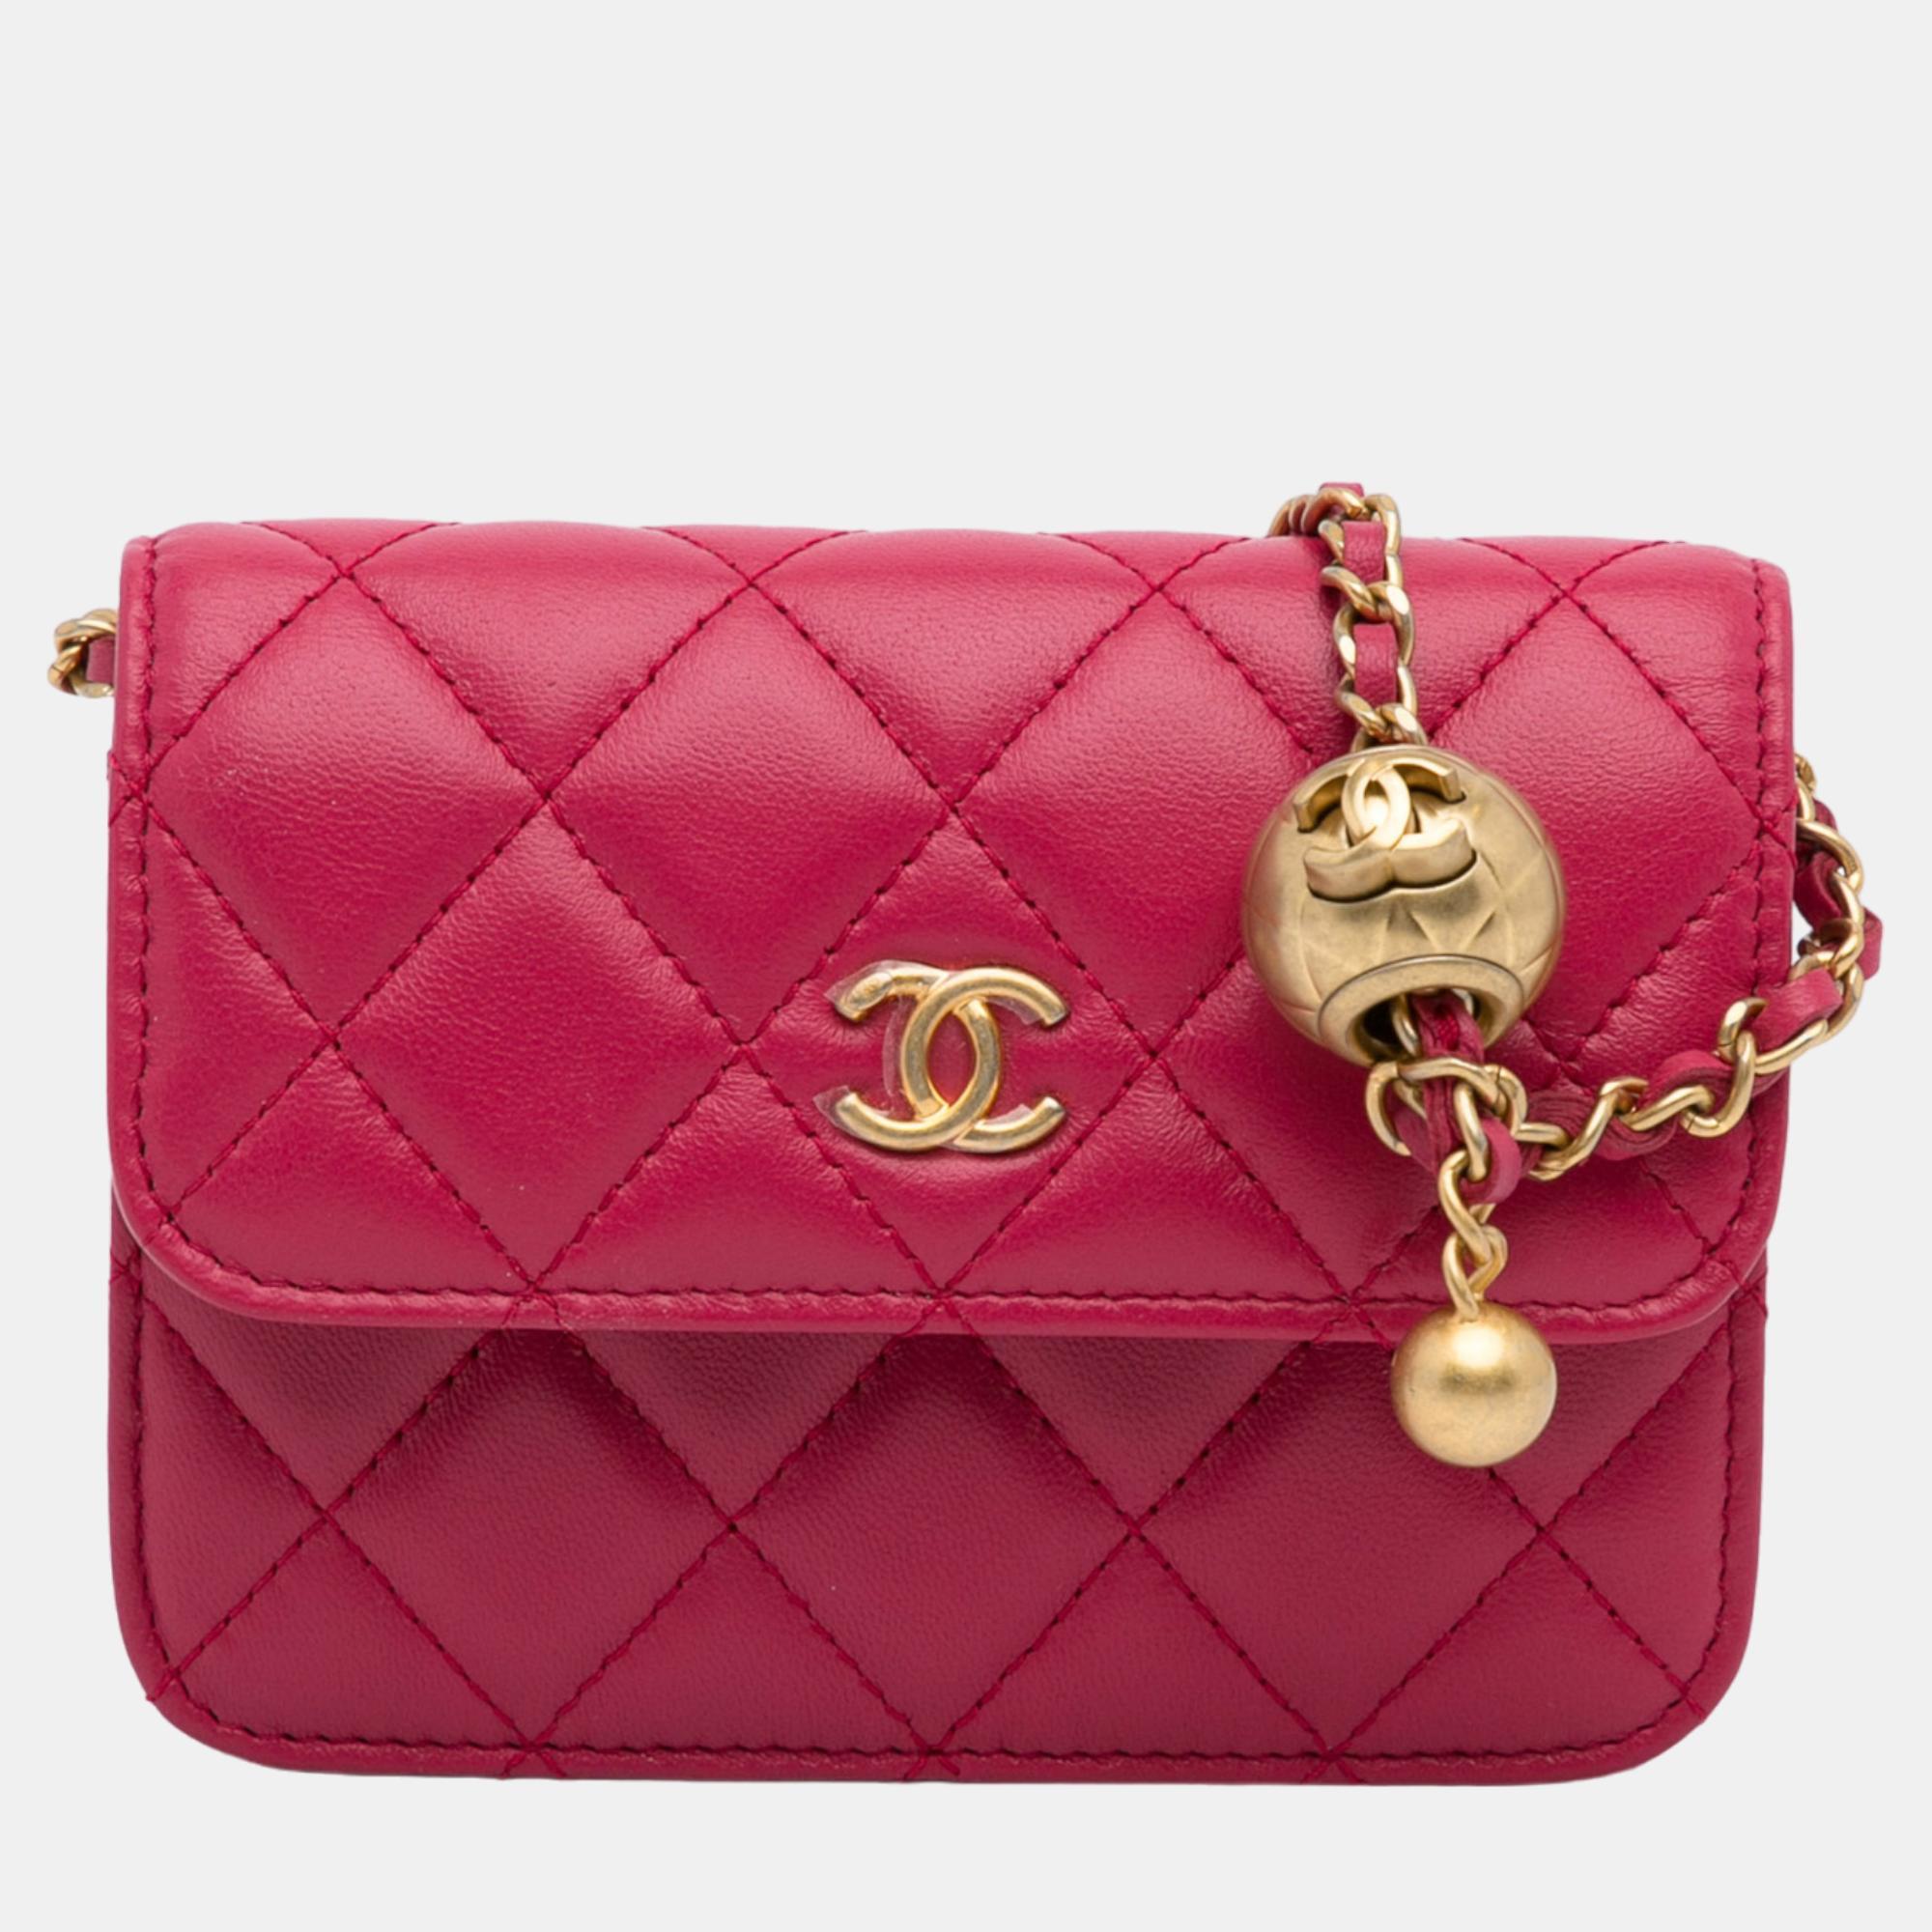 Chanel pink mini cc matelasse pearl crush lambskin crossbody bag